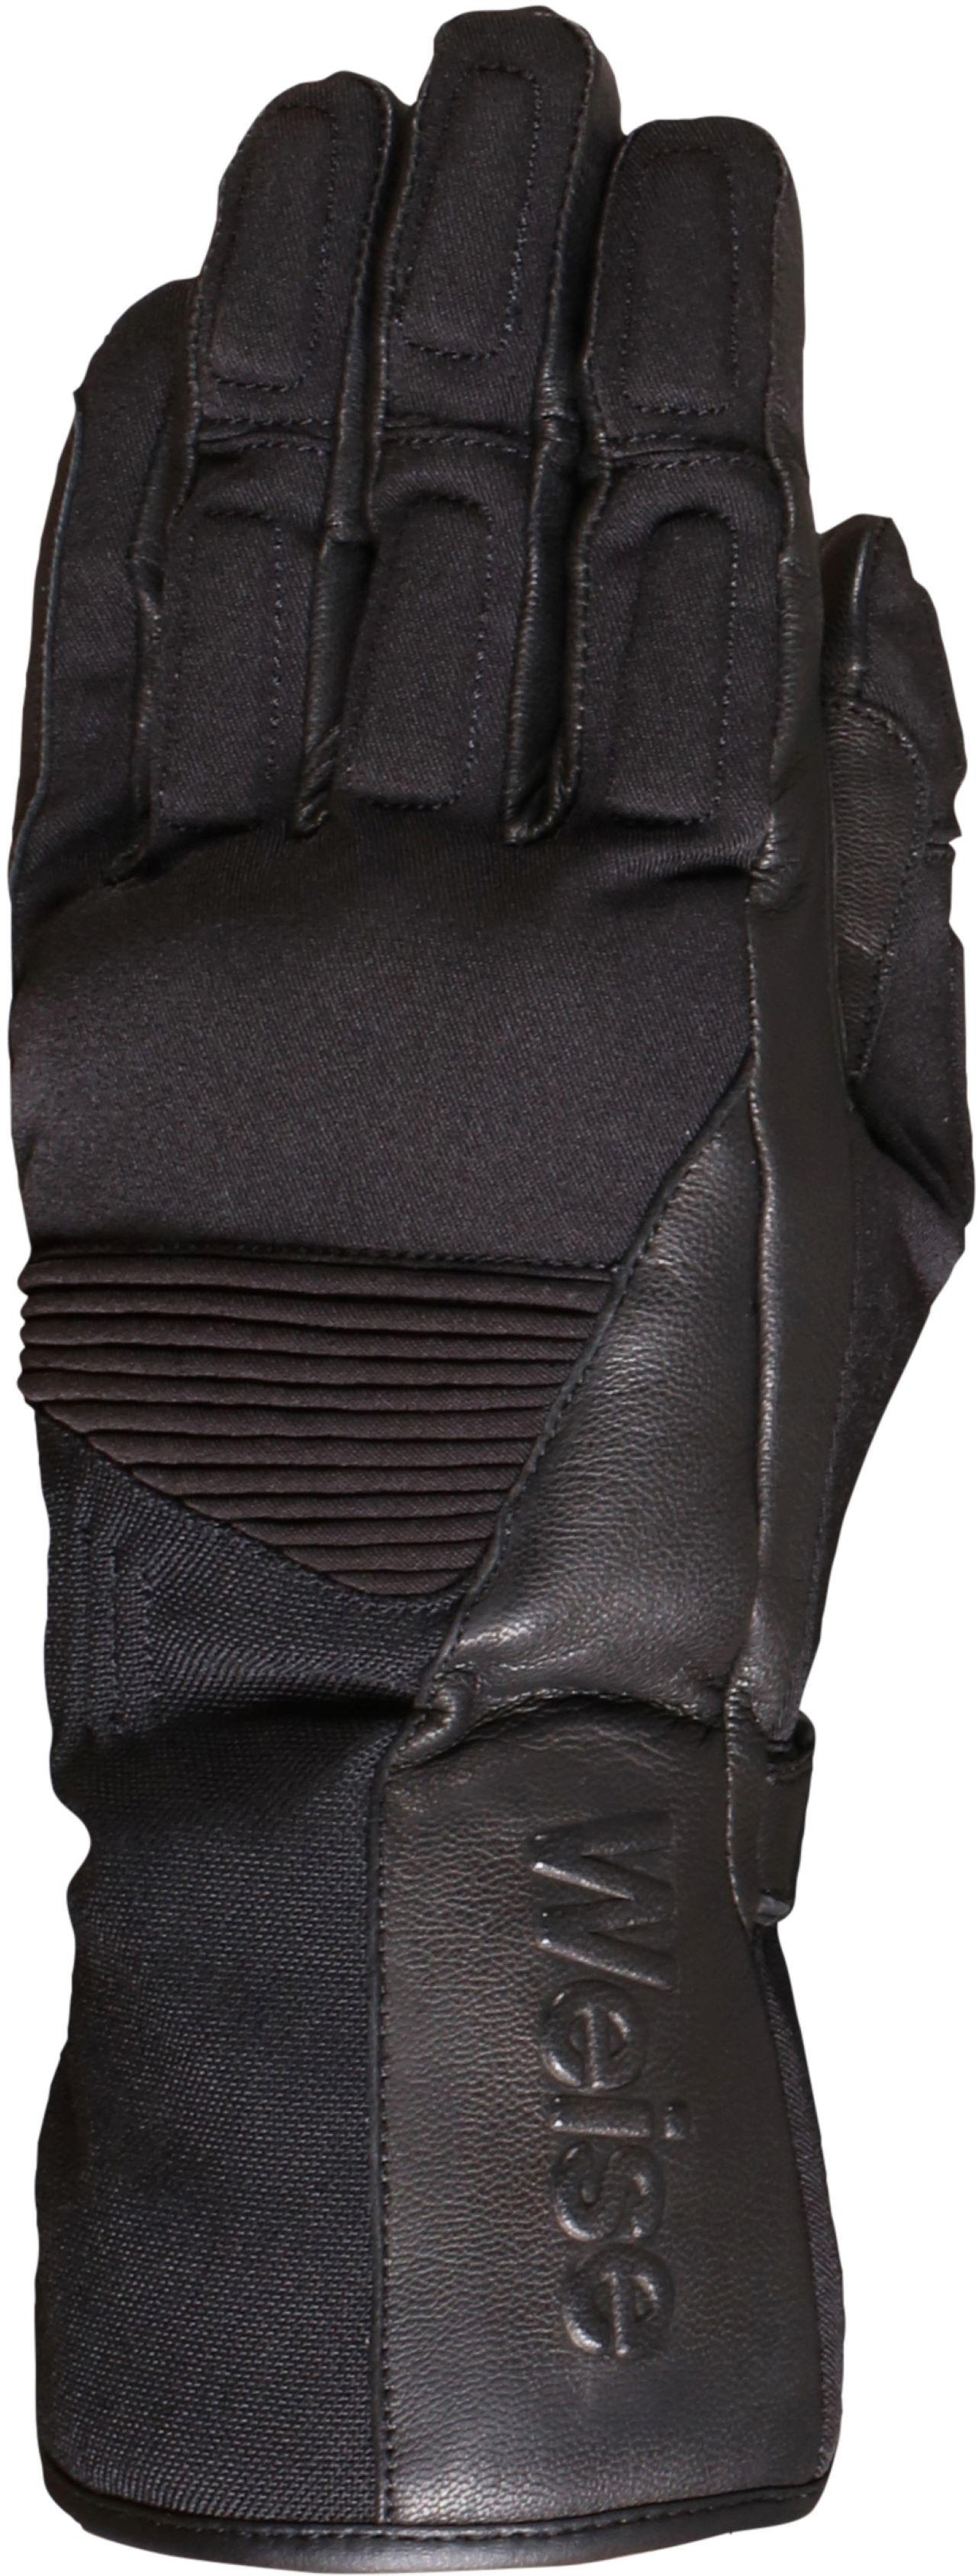 Weise Rider Motorcycle Gloves - Black, M